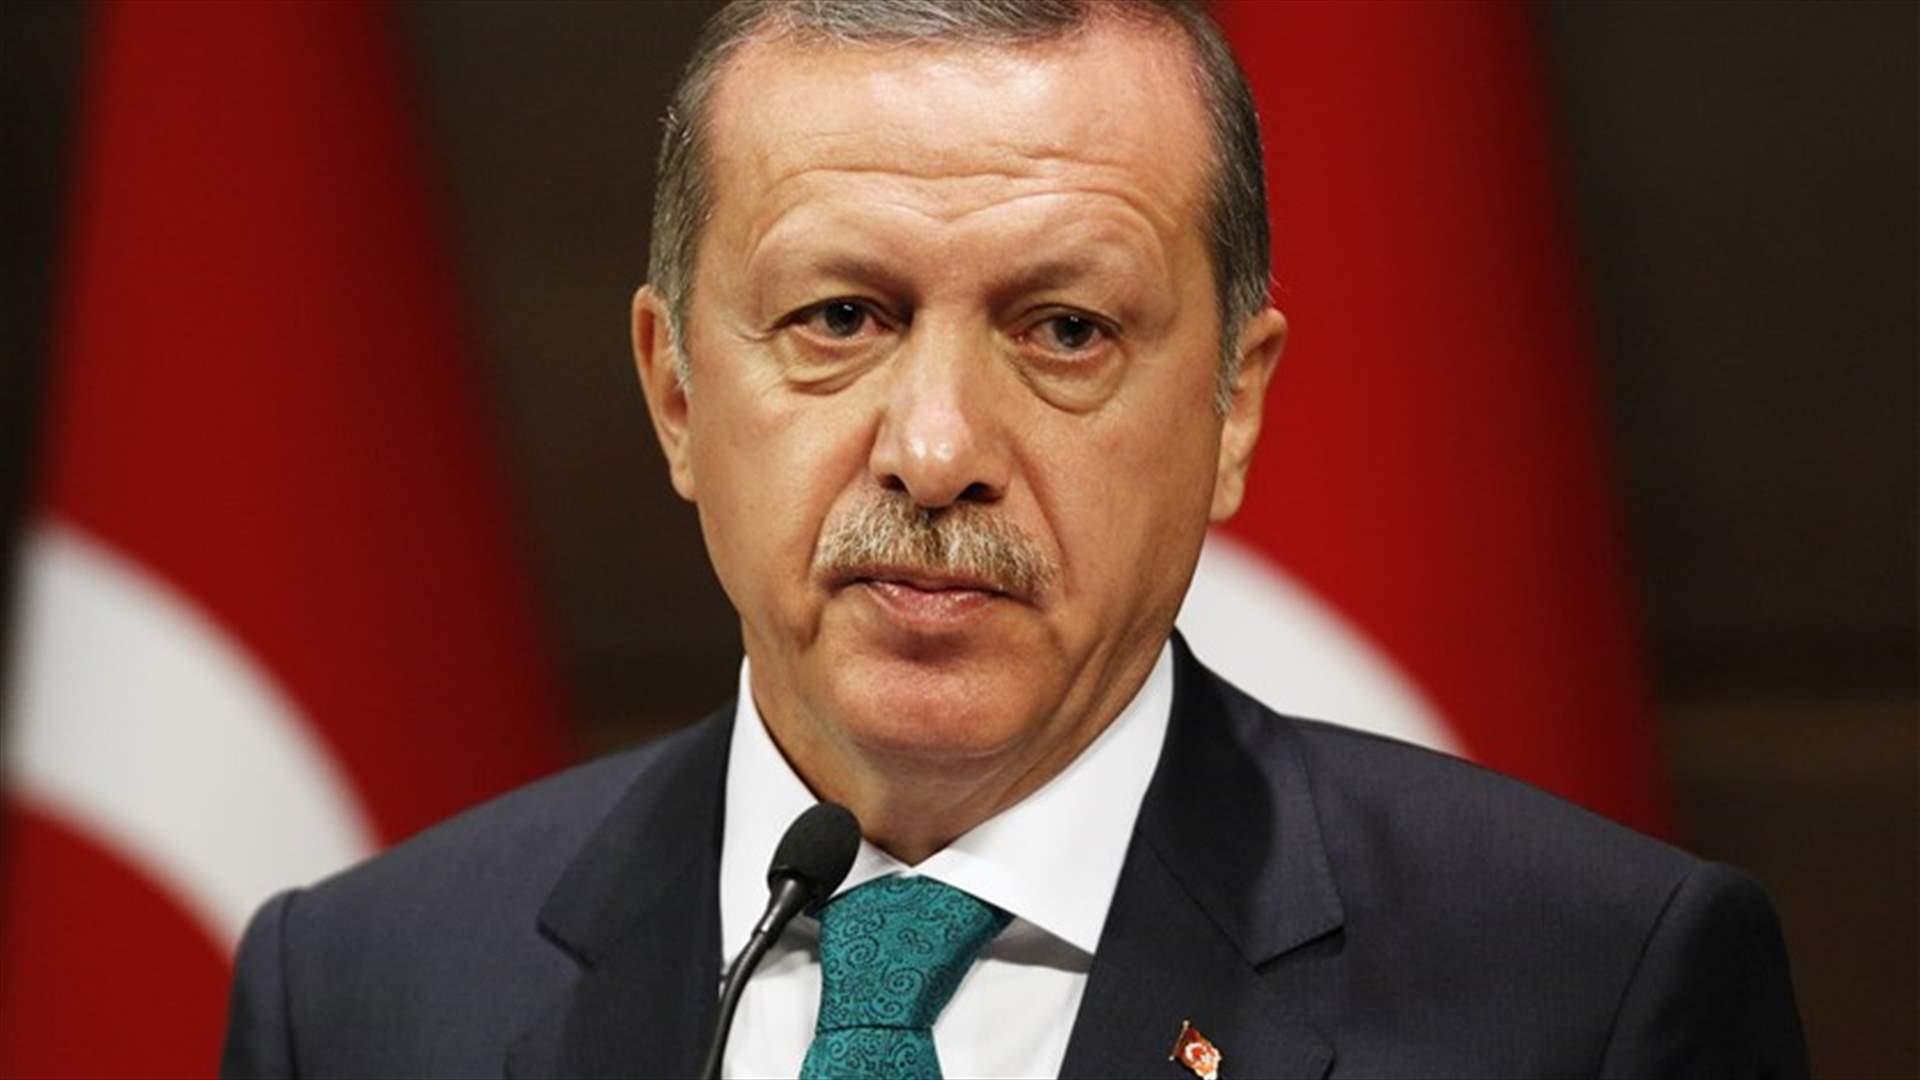 Turkey should consider stripping citizenship from supporters of terrorism - Erdogan